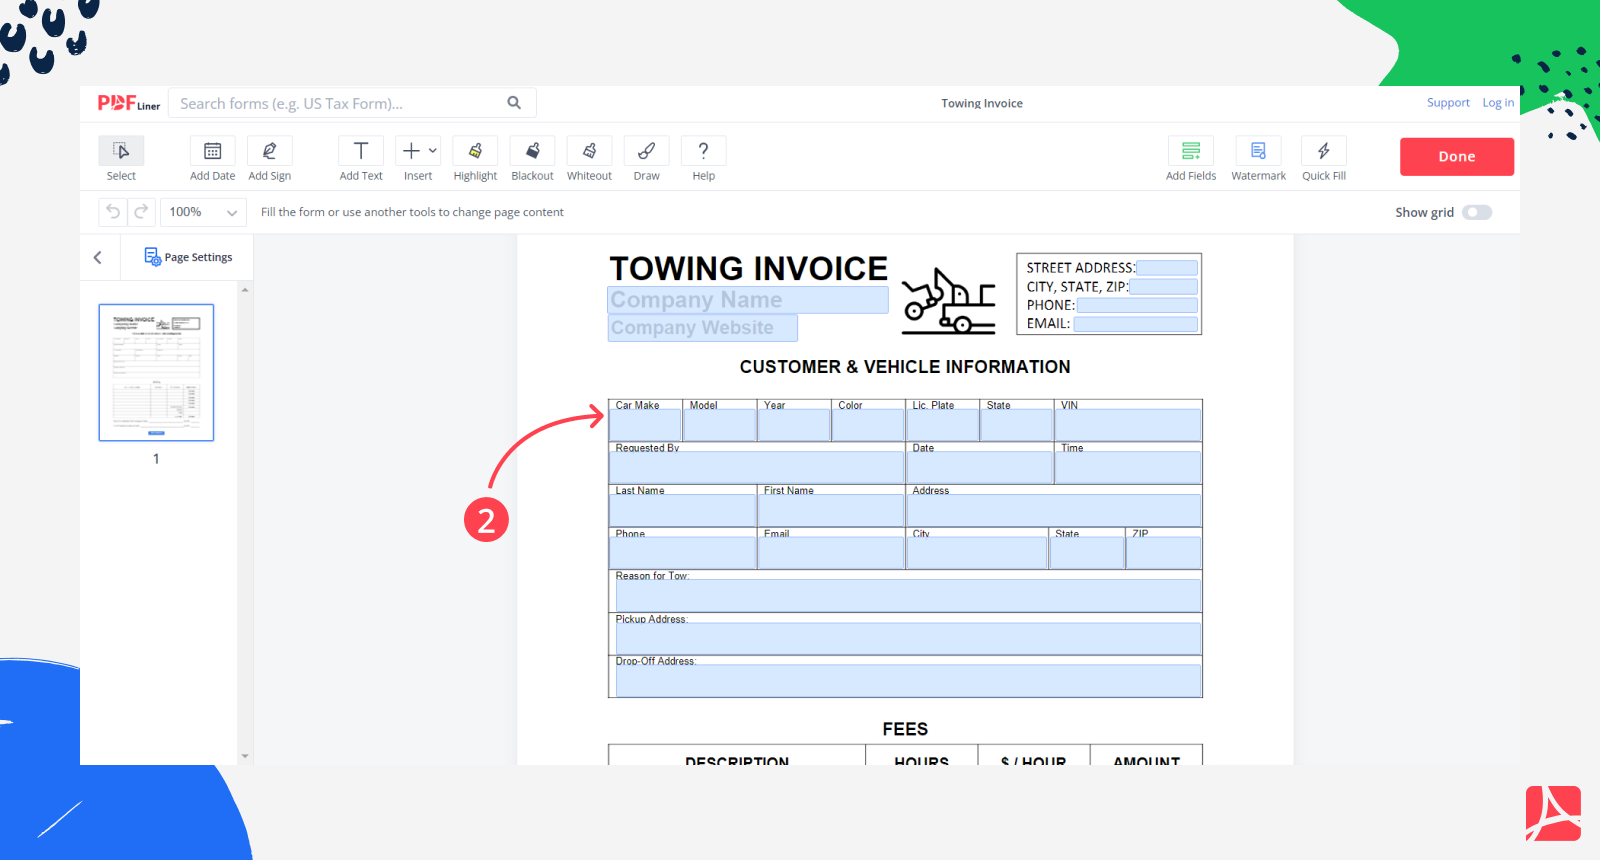 Towing Invoice screenshot step 2